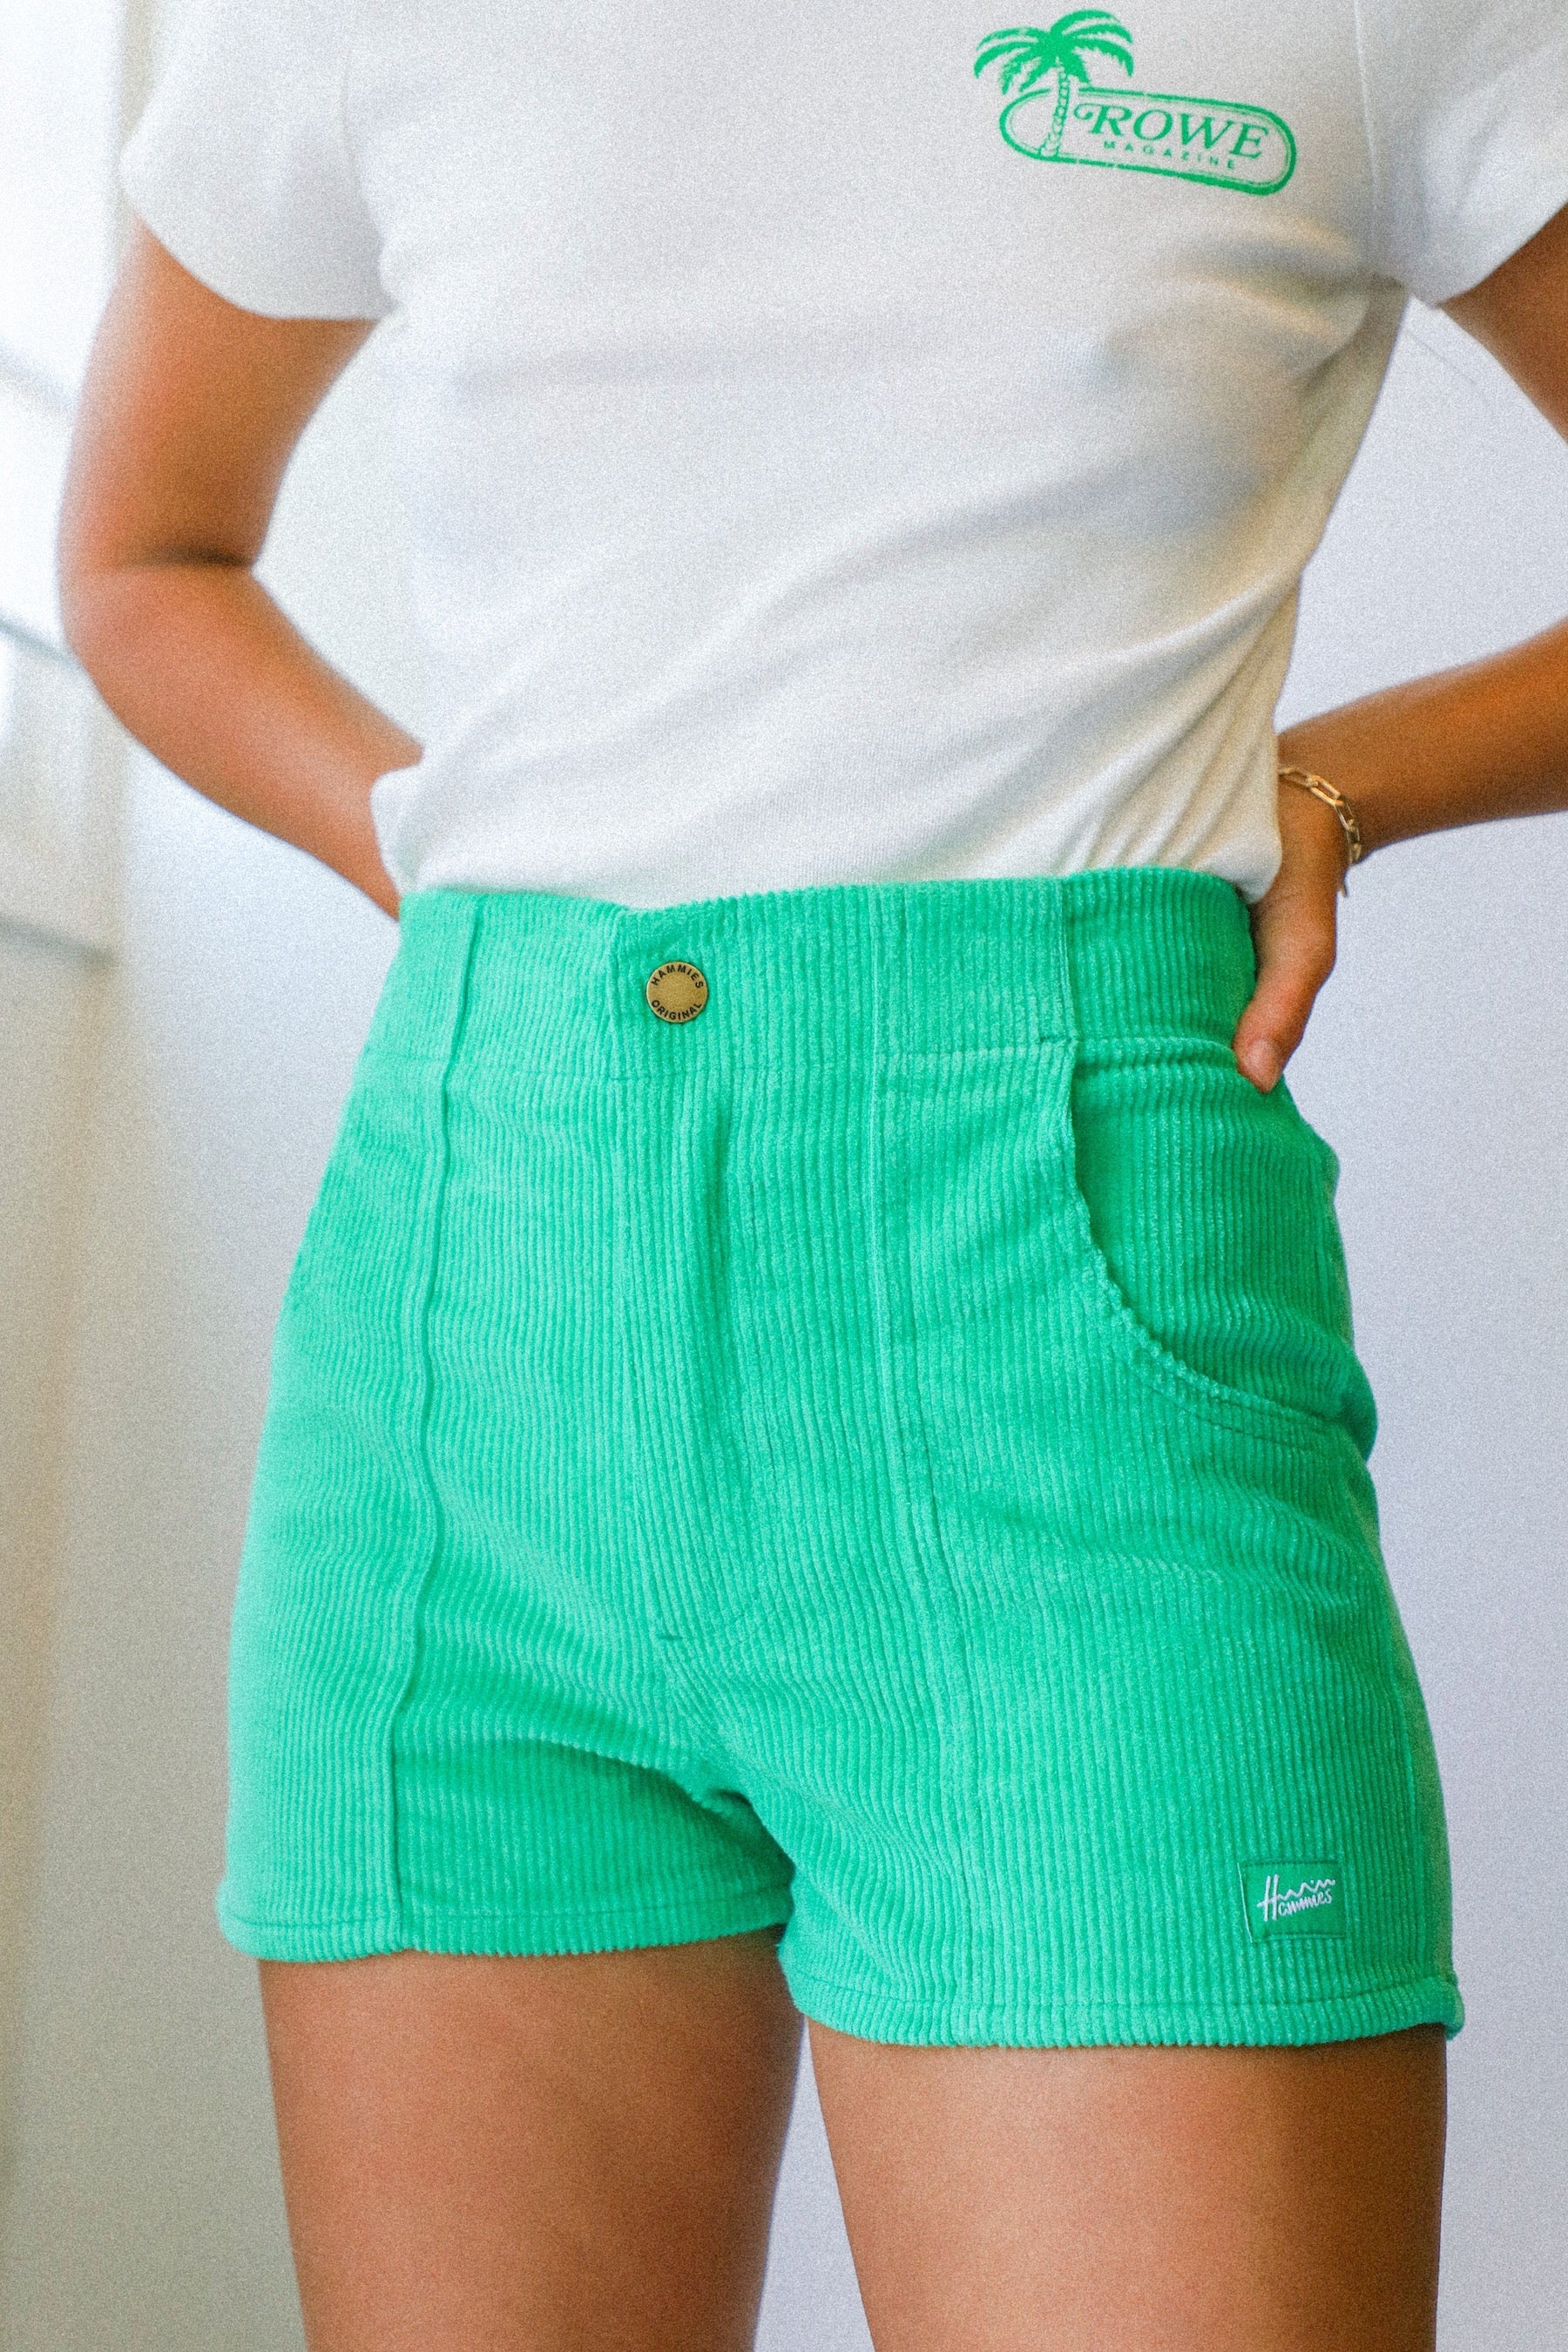 Green Hammies Shorts